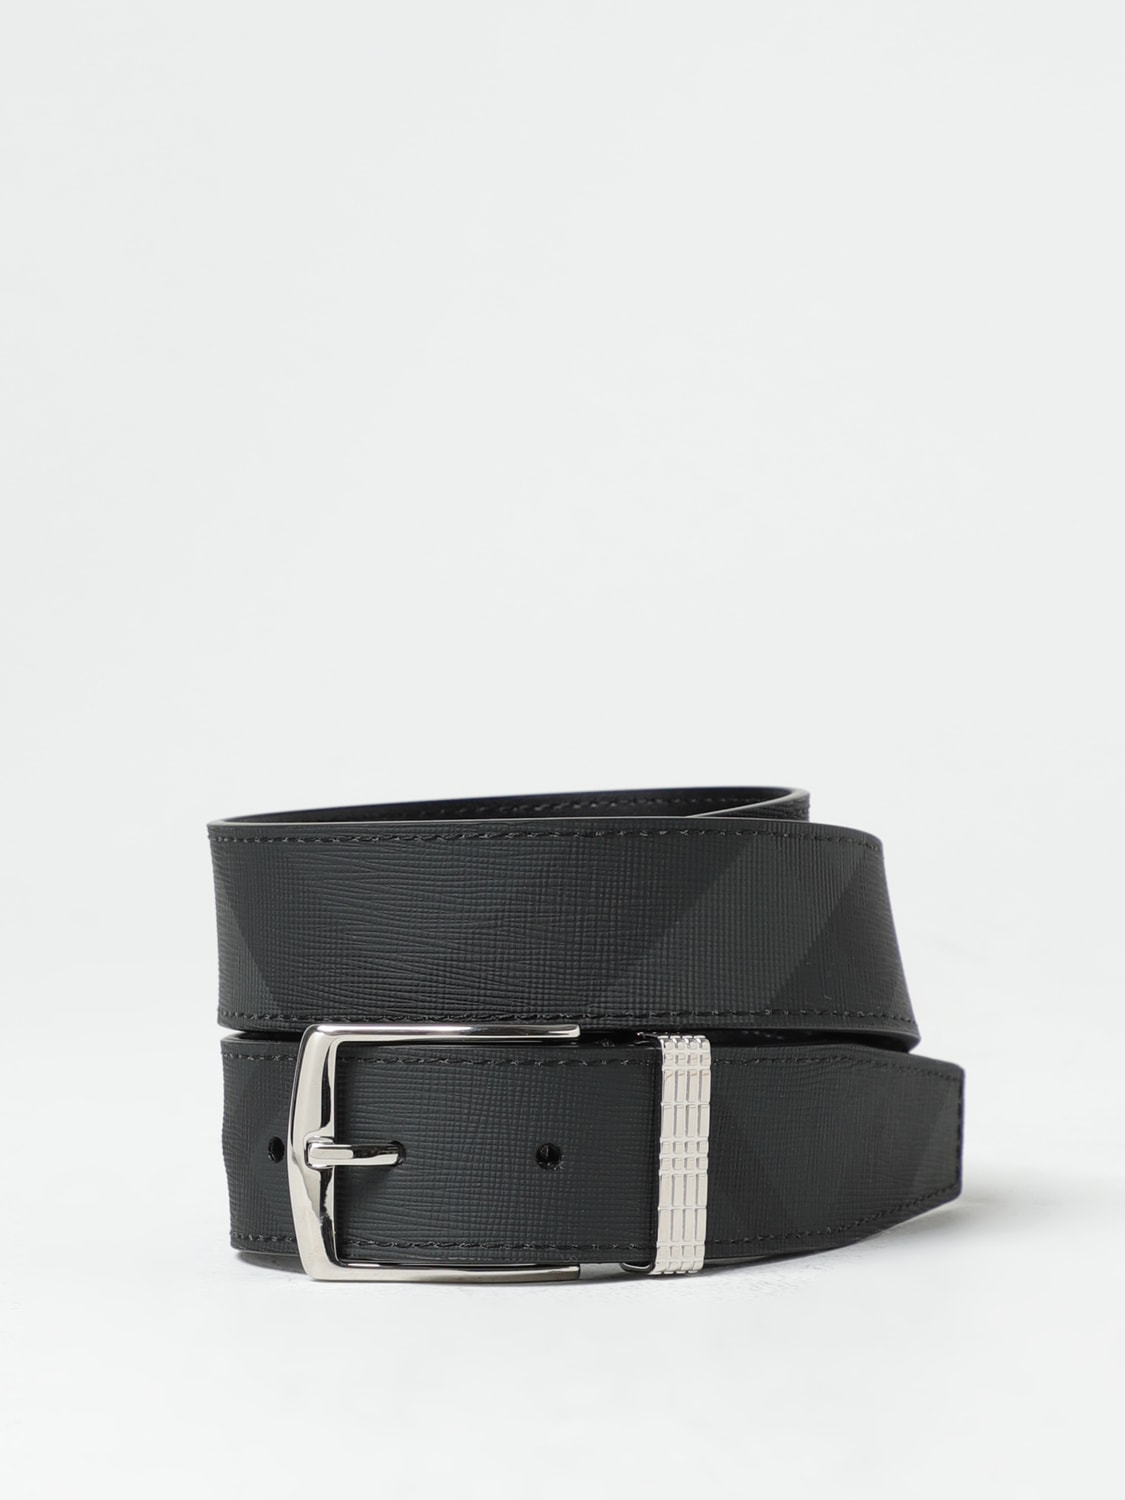 Burberry - Check belt